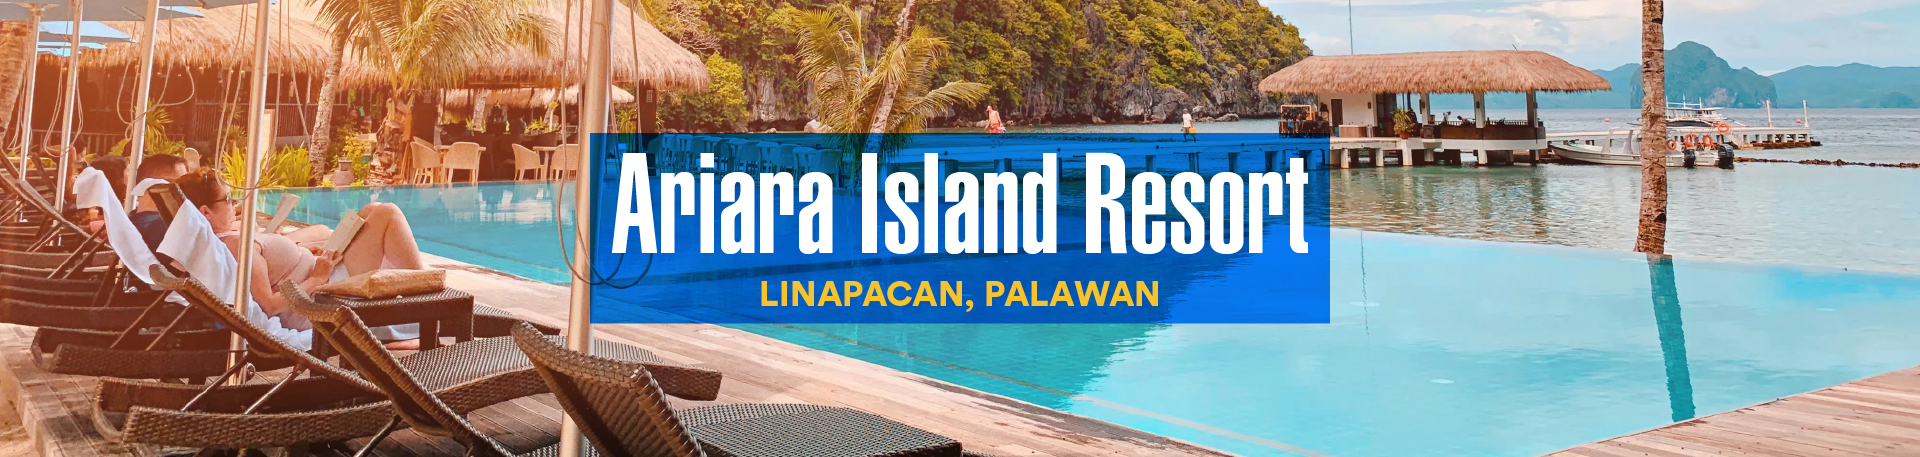 Arira Island Resort, Linapacan, Palawan